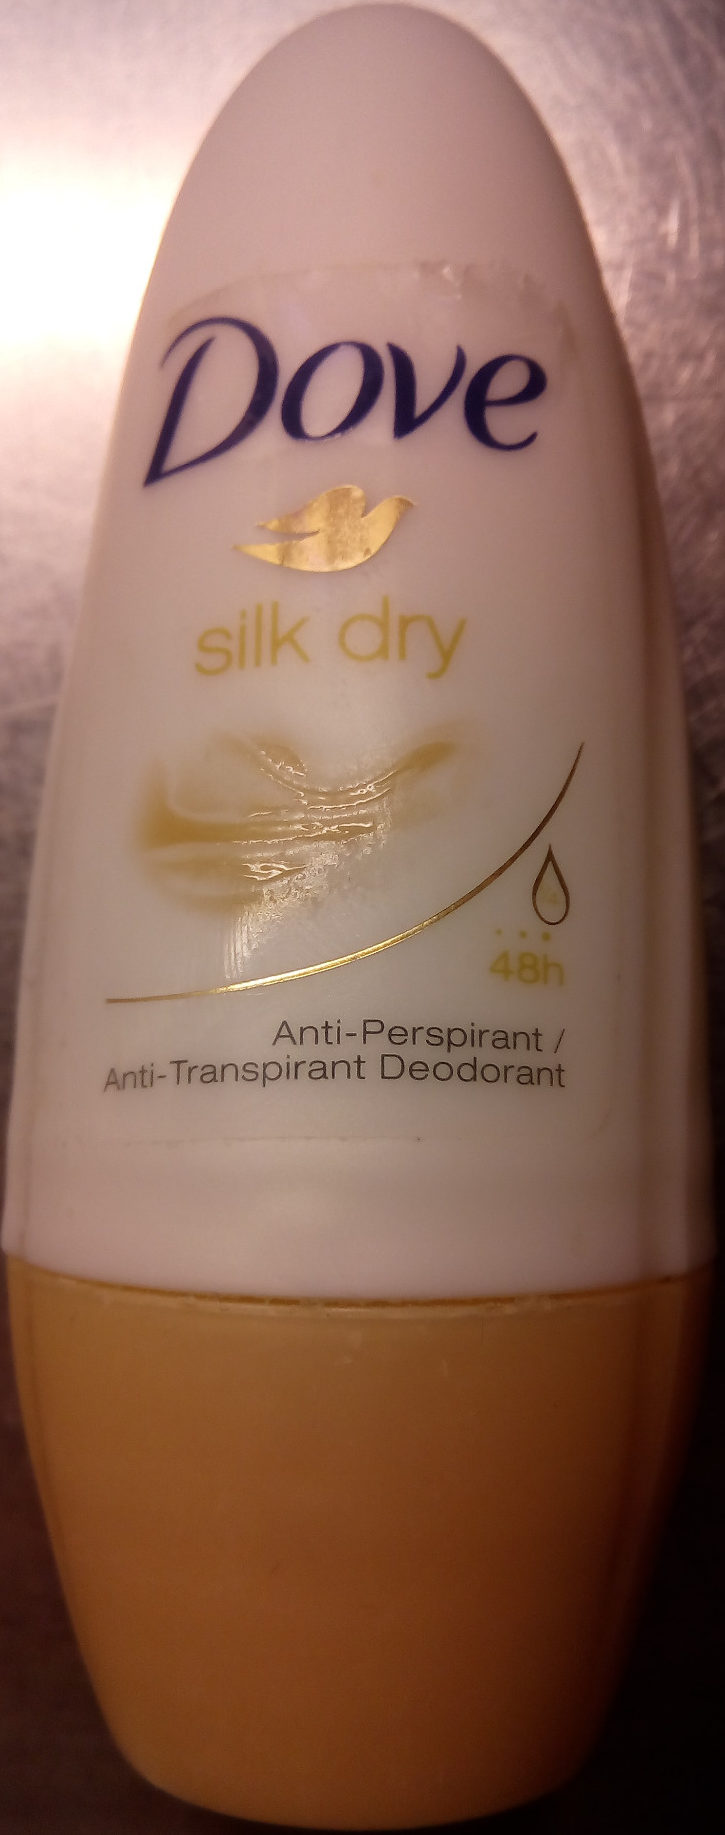 Dove silk dry 24h - Produkt - en